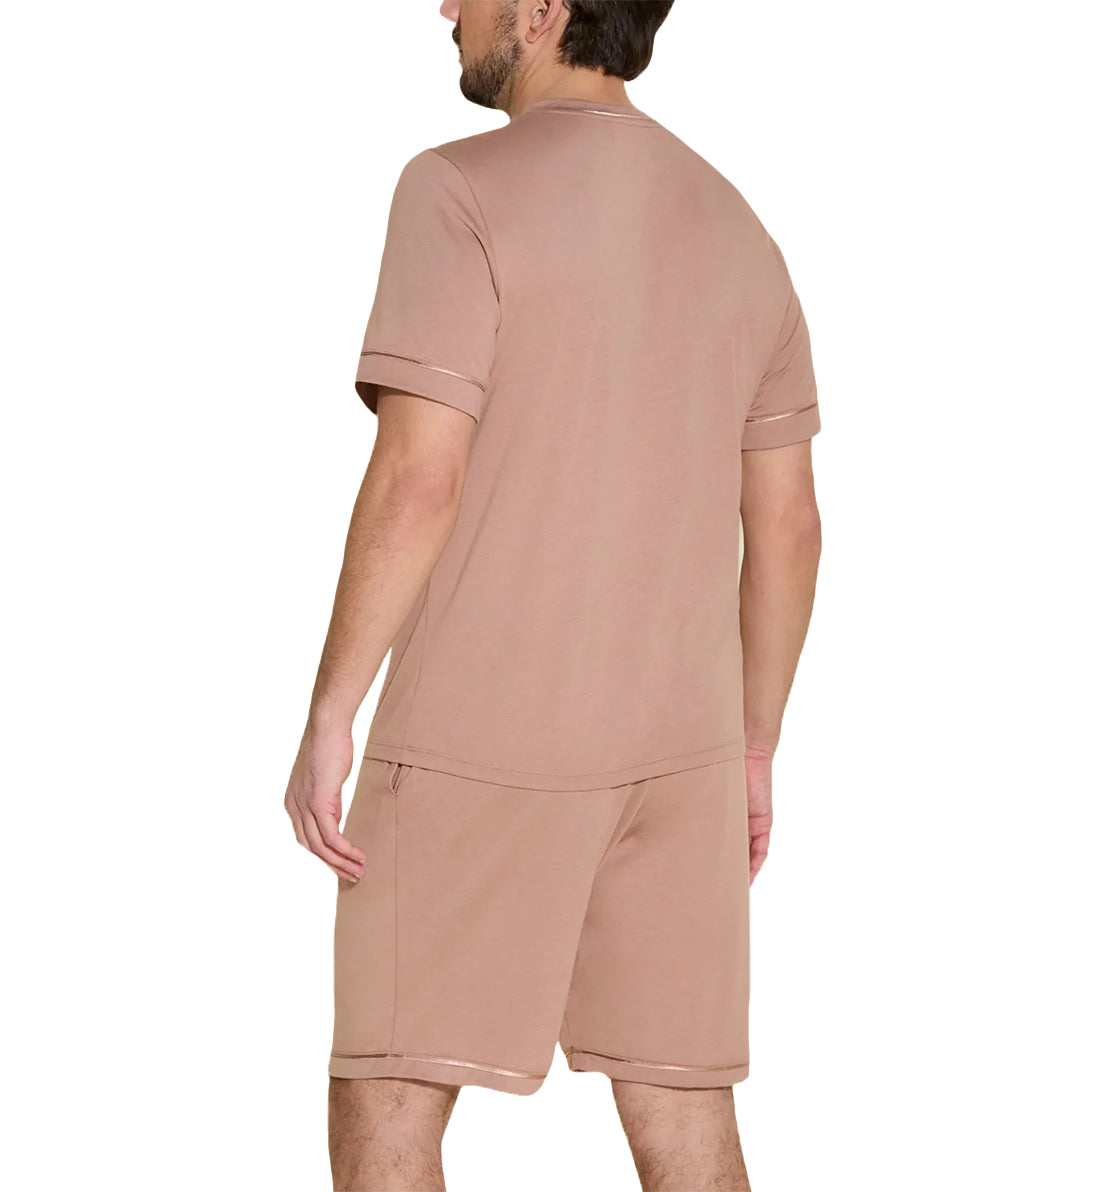 Cosabella Men's Short Sleeve V-Neck Shirt & Short PJ Set (AMORE9421),S,India - India,Small